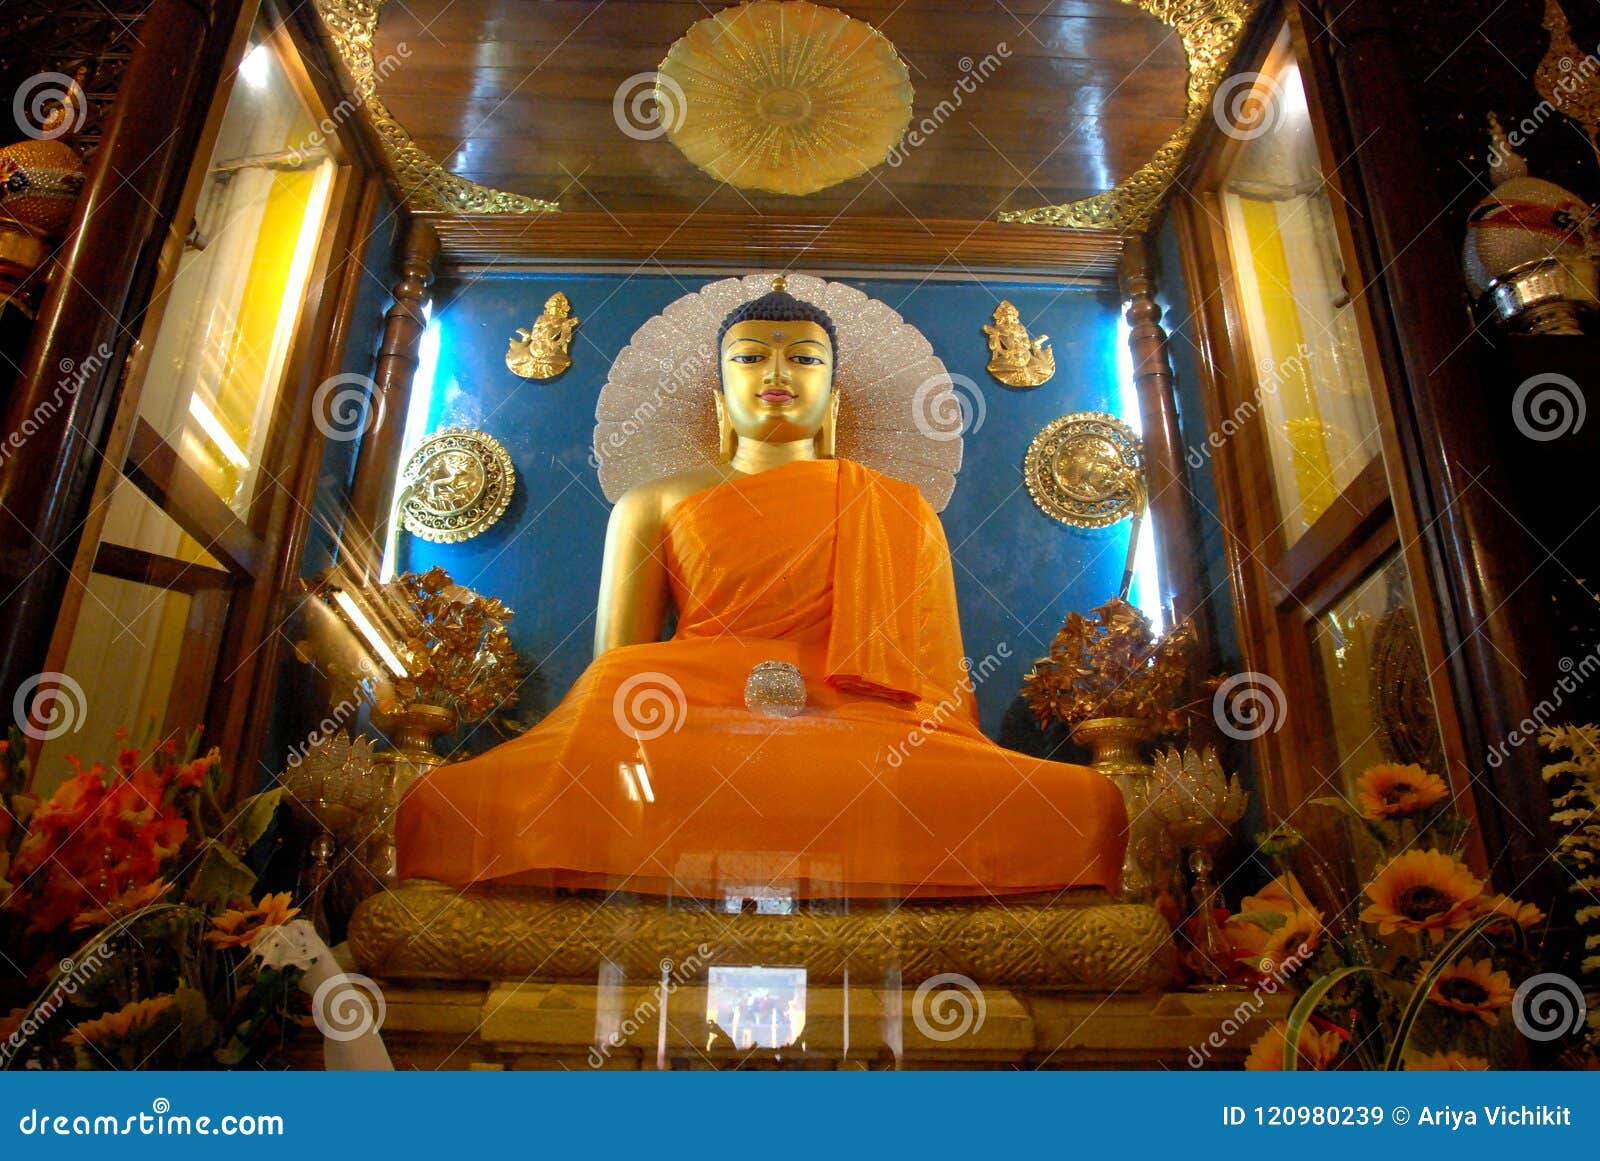 Mahabodhi Temple in Bodh Gaya, Bihar, India Editorial Photo - Image of cultural, asia: 68328226